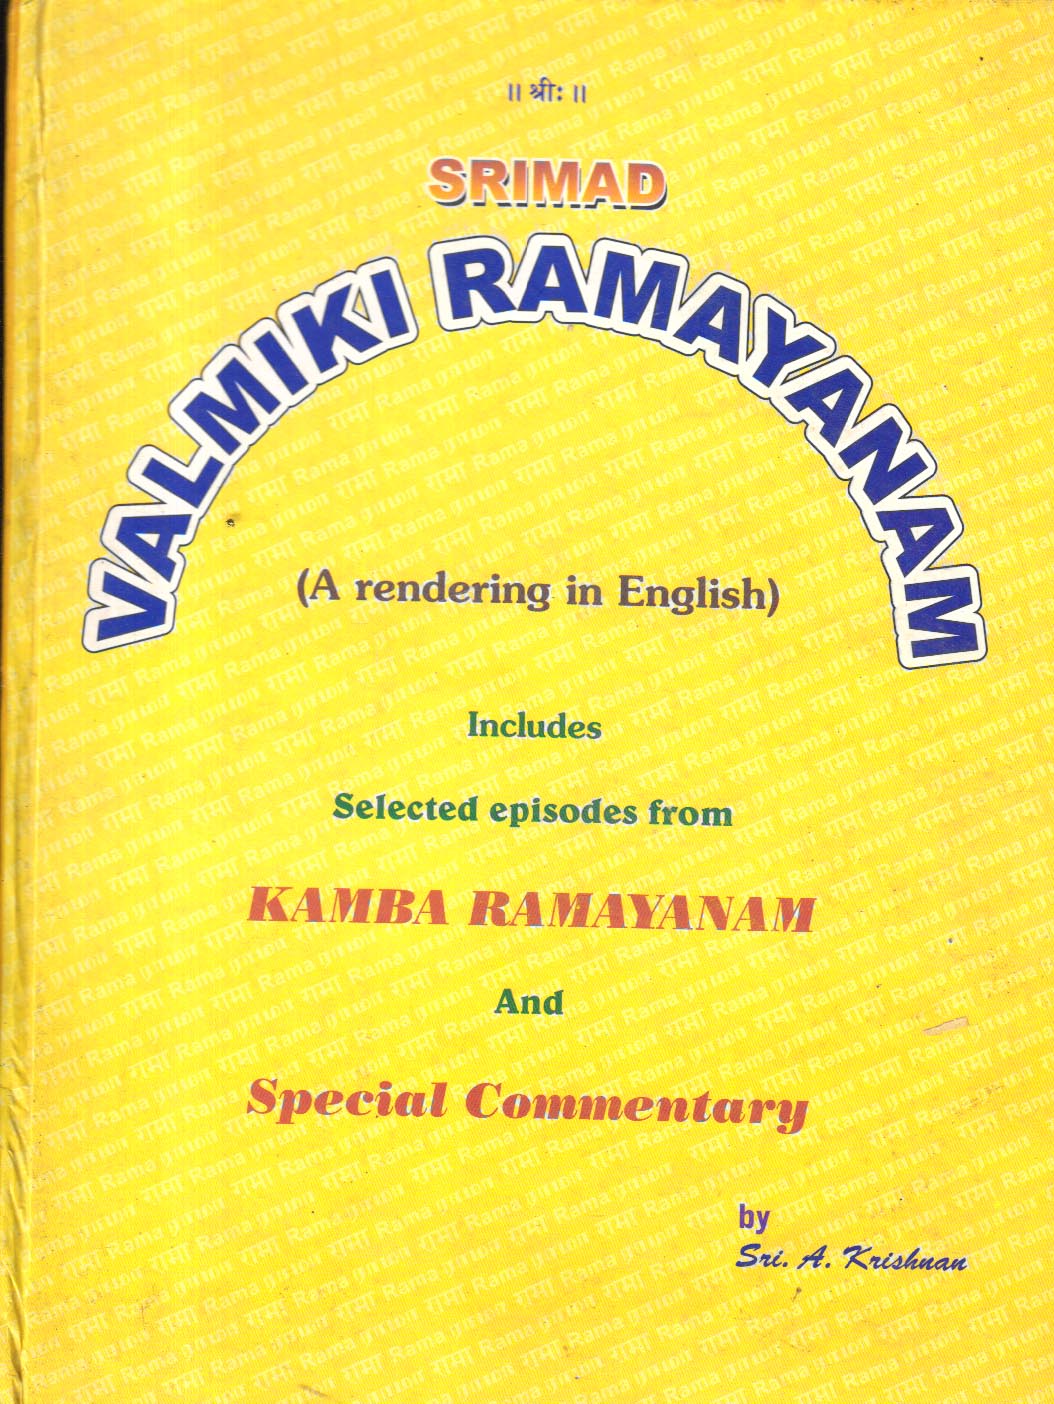 Srimad Valmiki Ramayanam